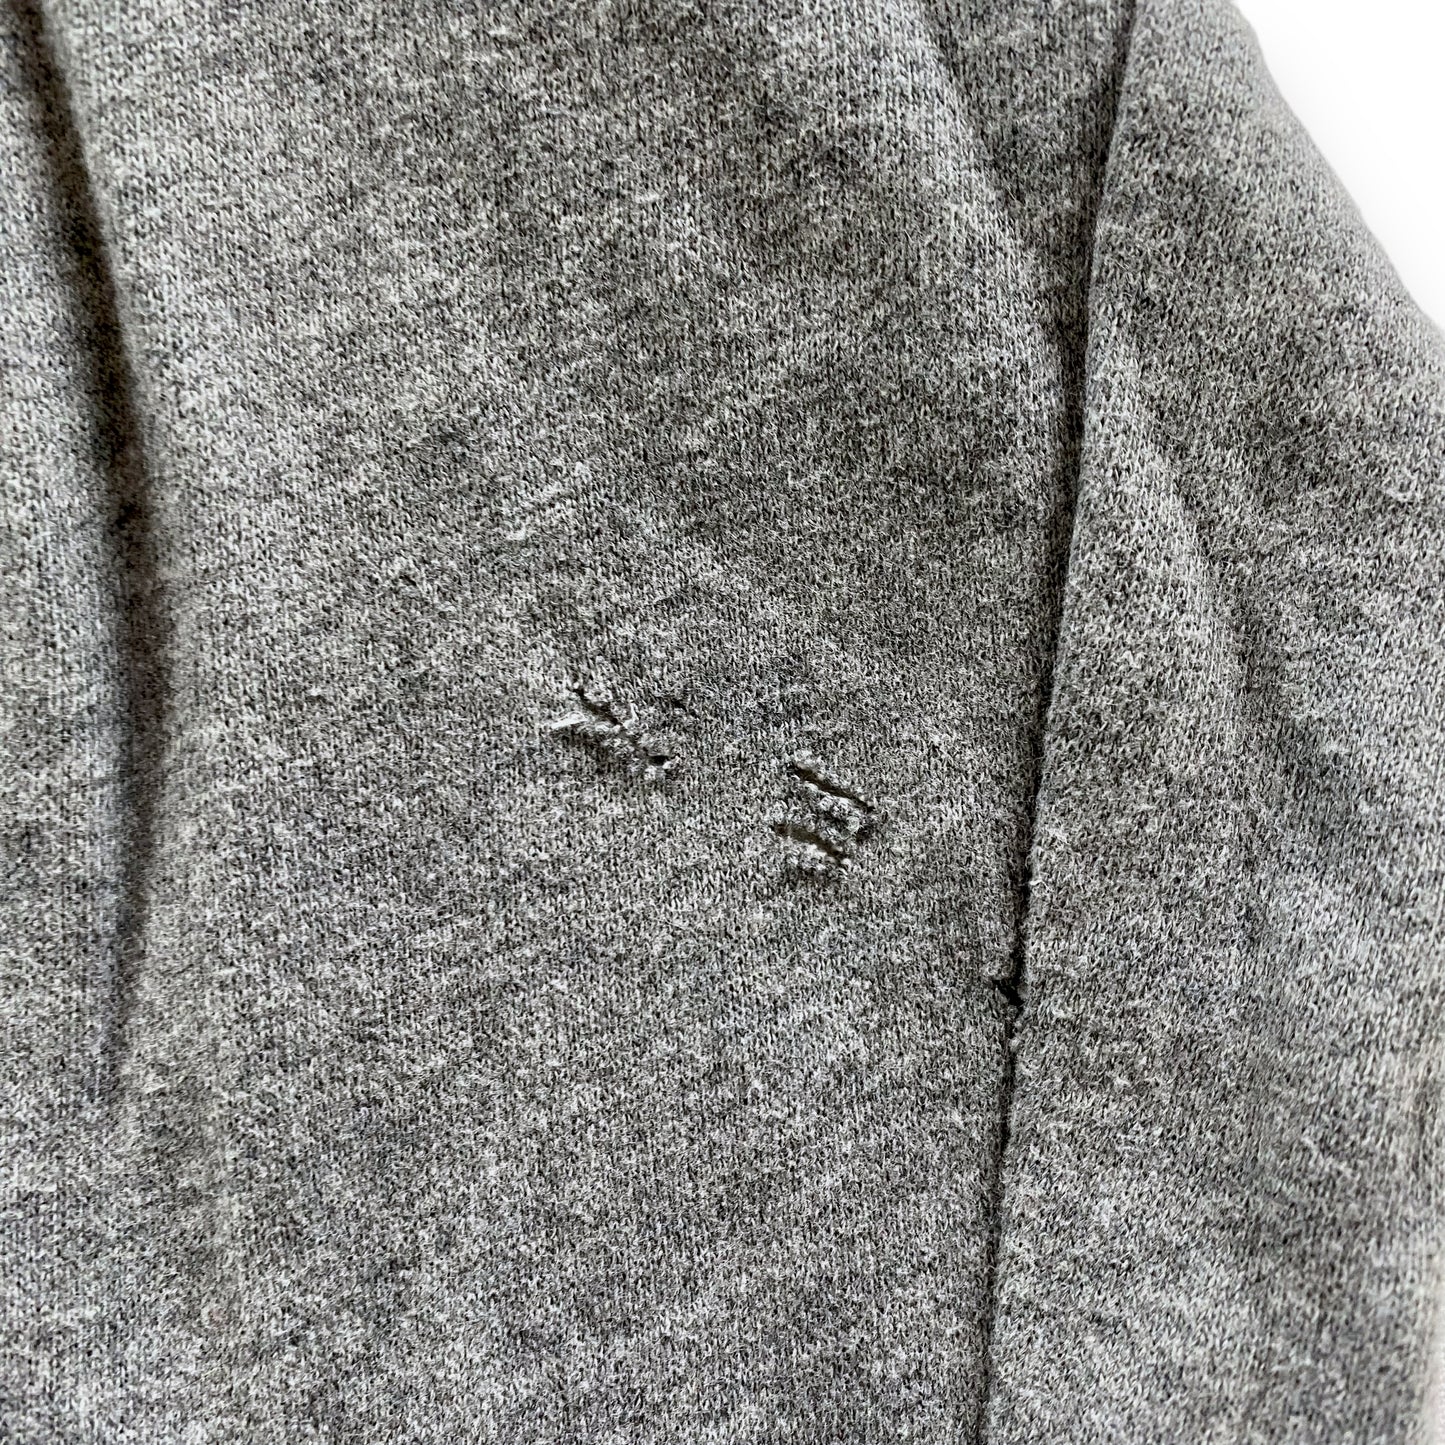 Grey sweater Tommy Hilfiger / Size S